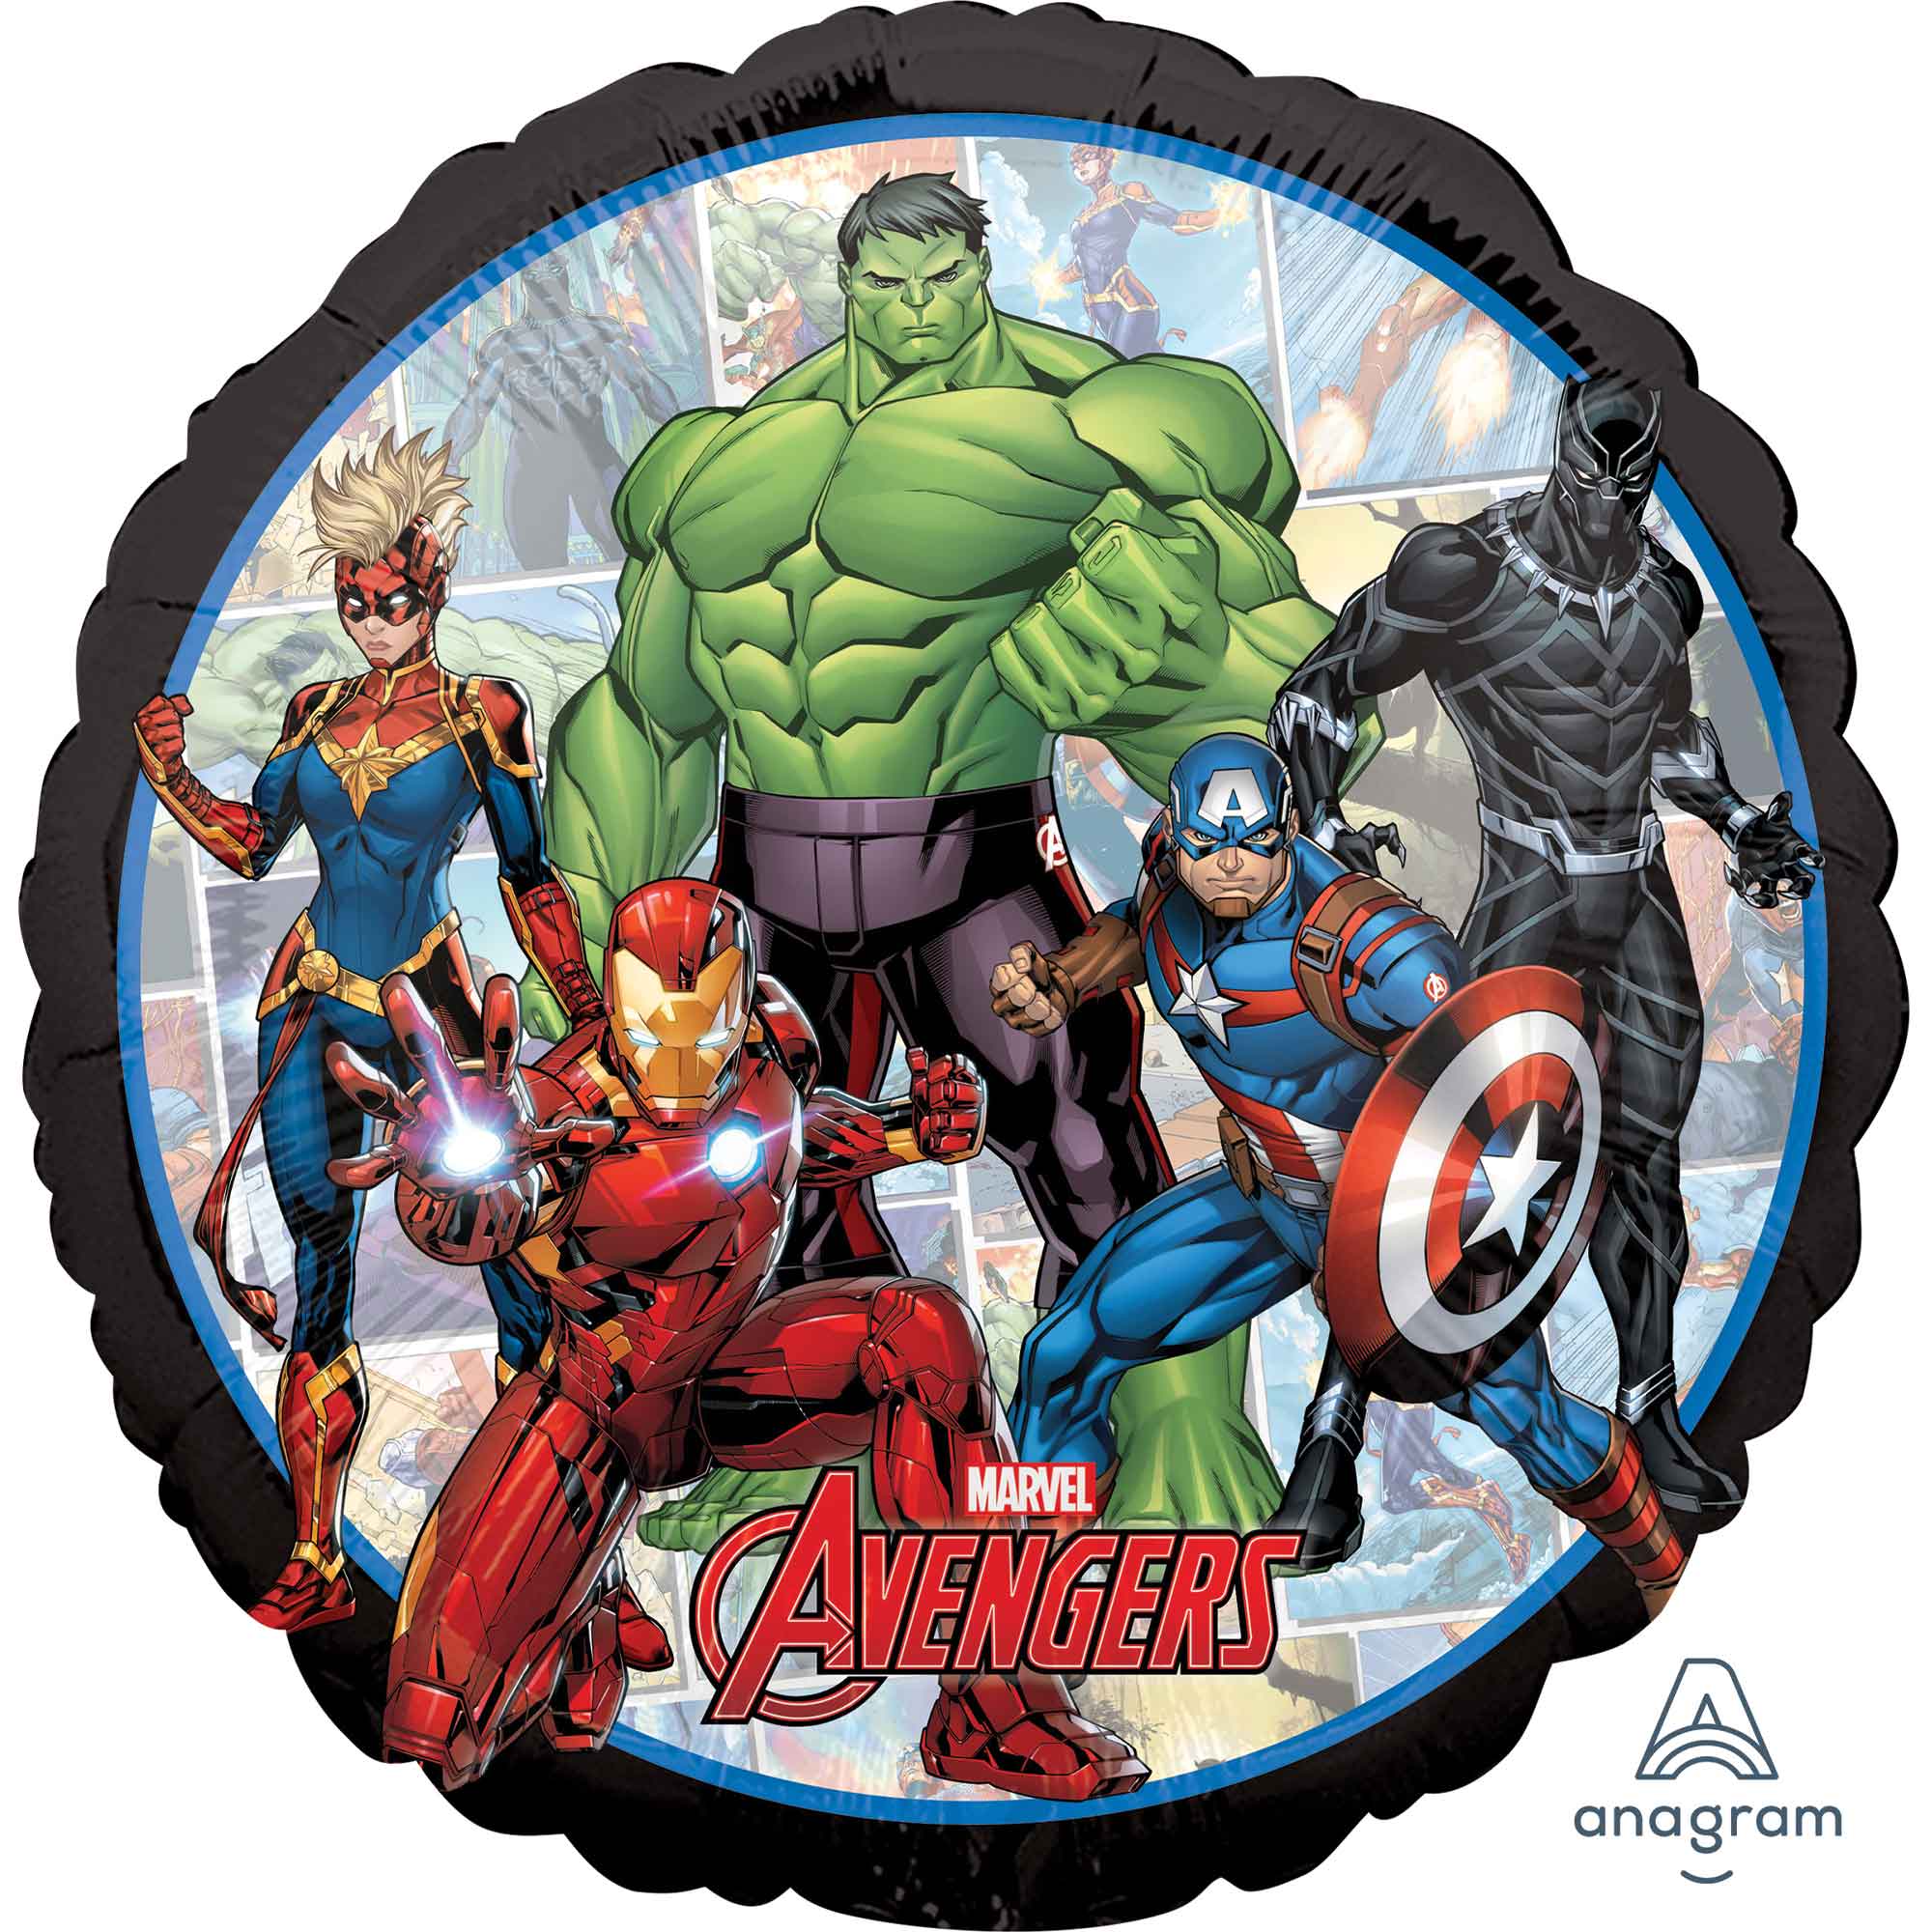 Marvel Avengers Marvel Powers Unite Foil Balloon Standard HX - 45cm Default Title